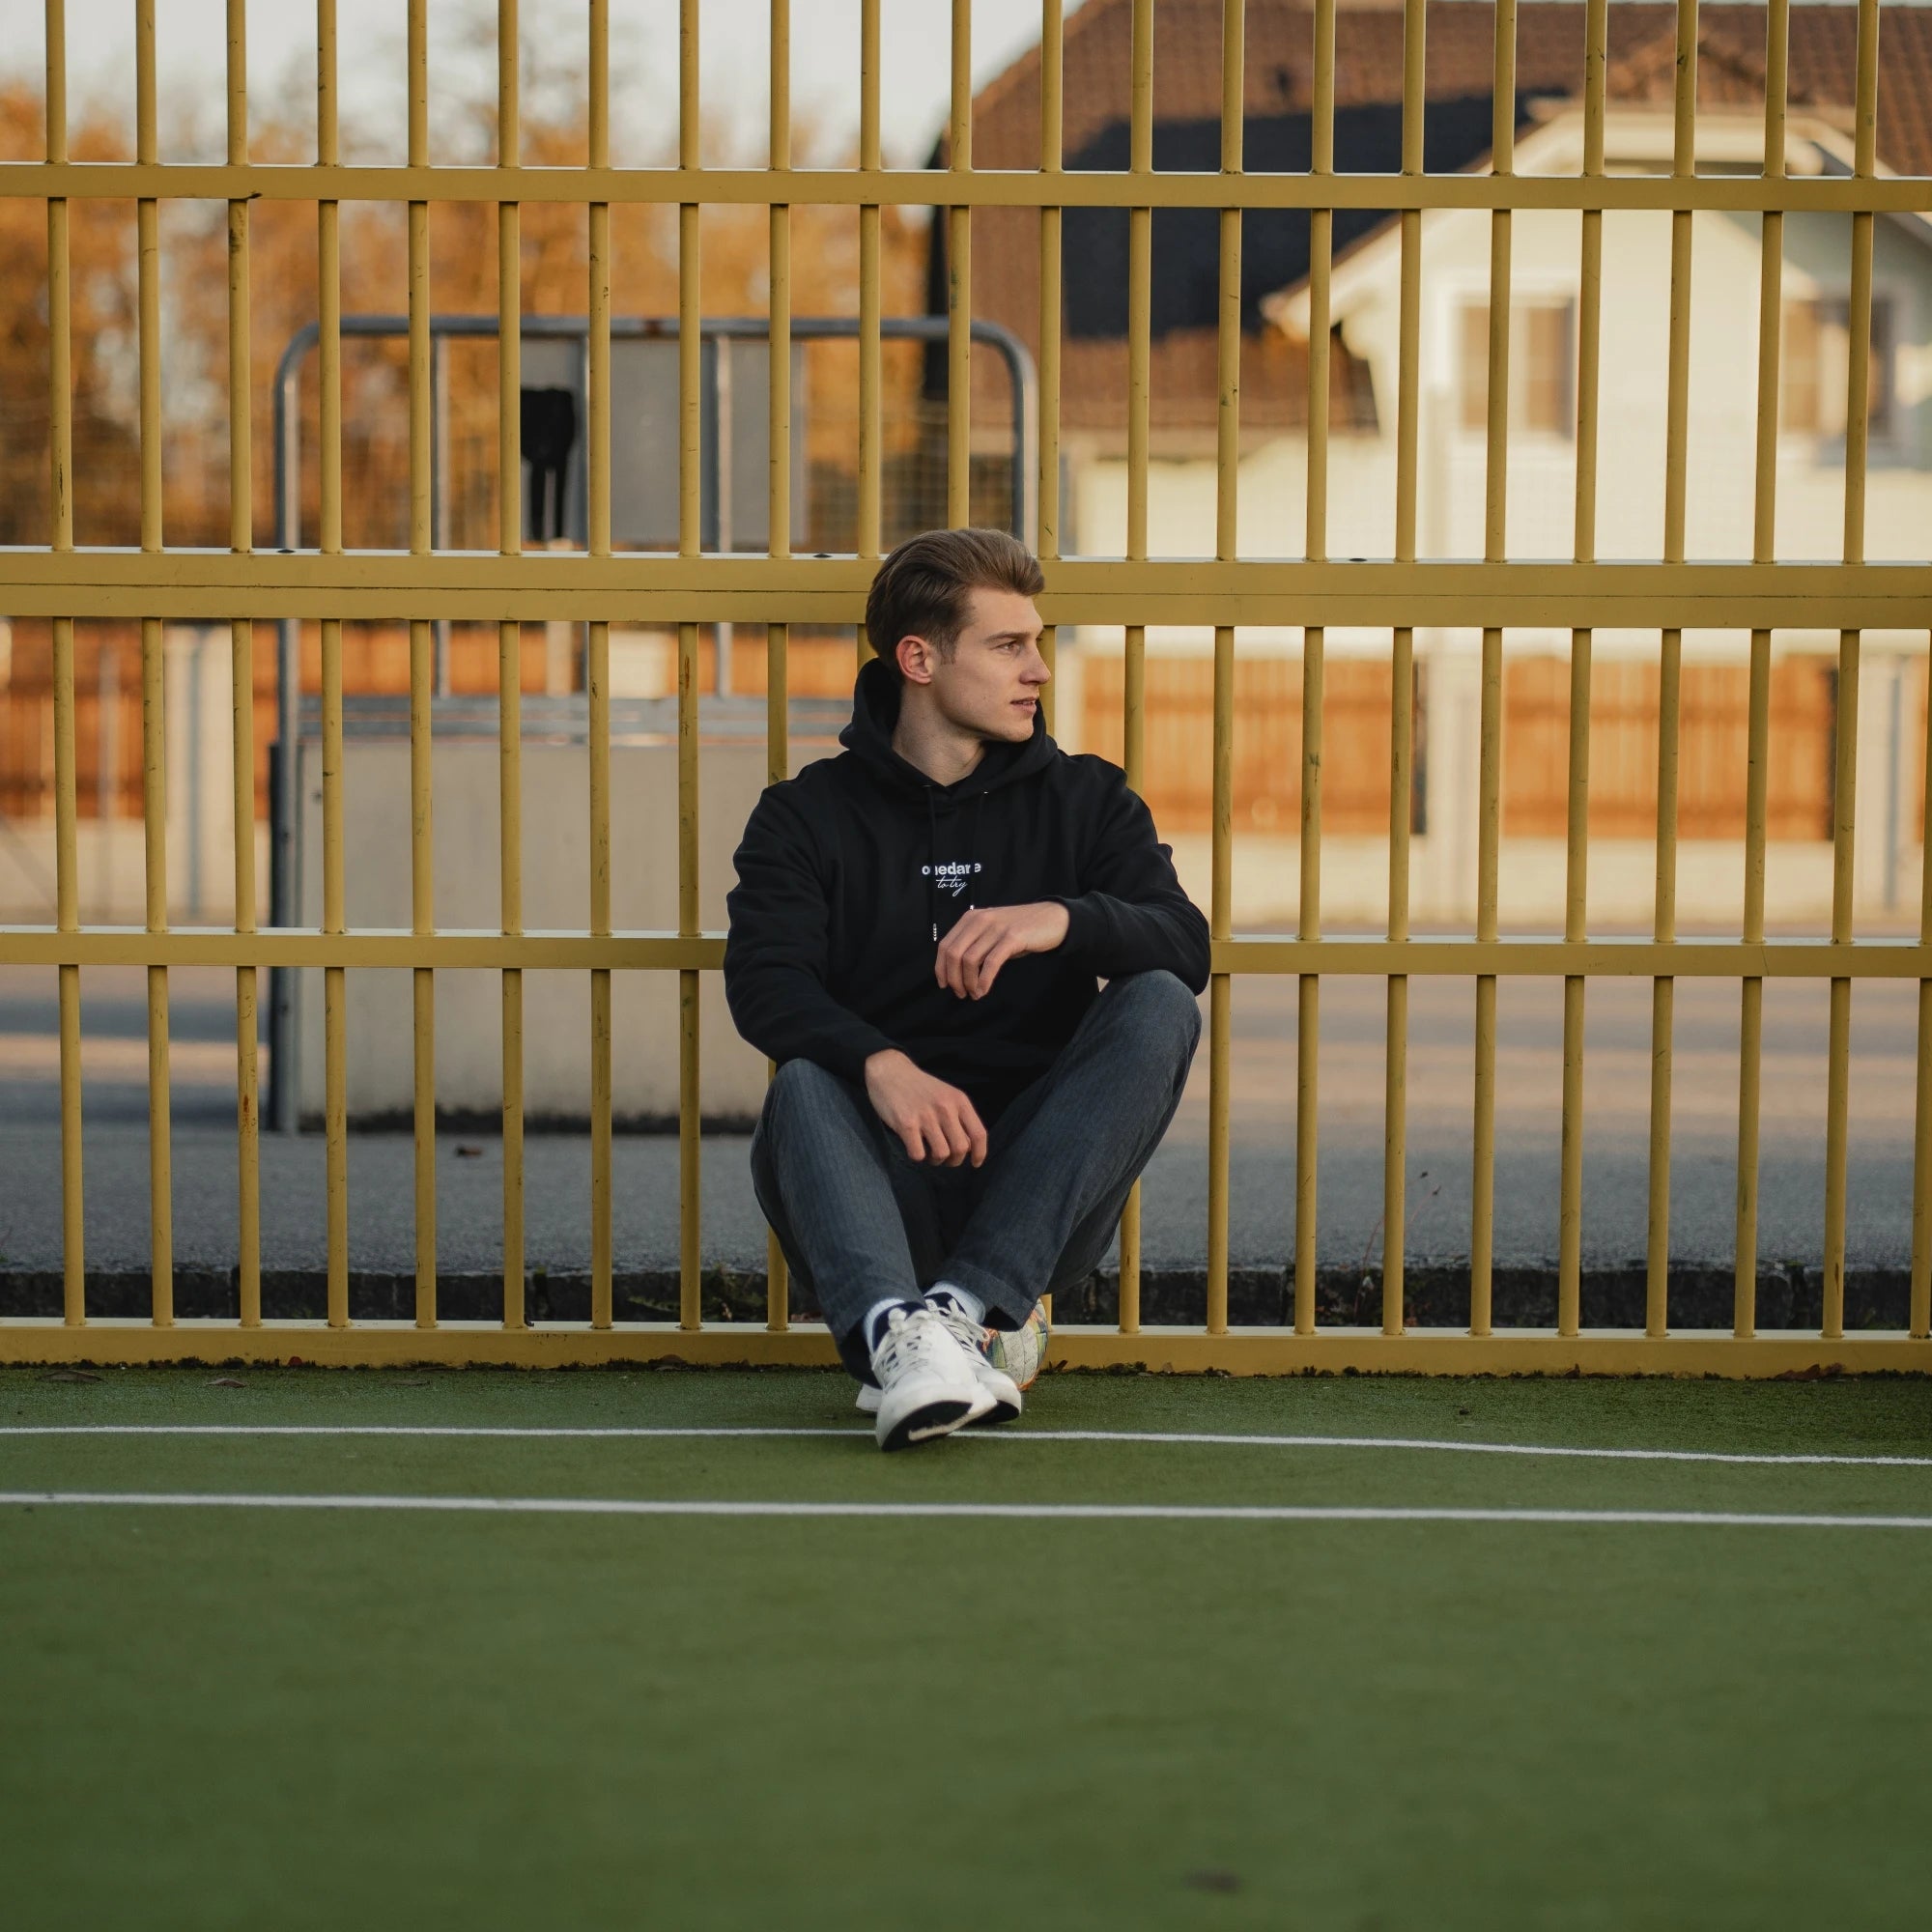 Tobias Anselm am Fußballplatz angelehnt an ein Gitter.